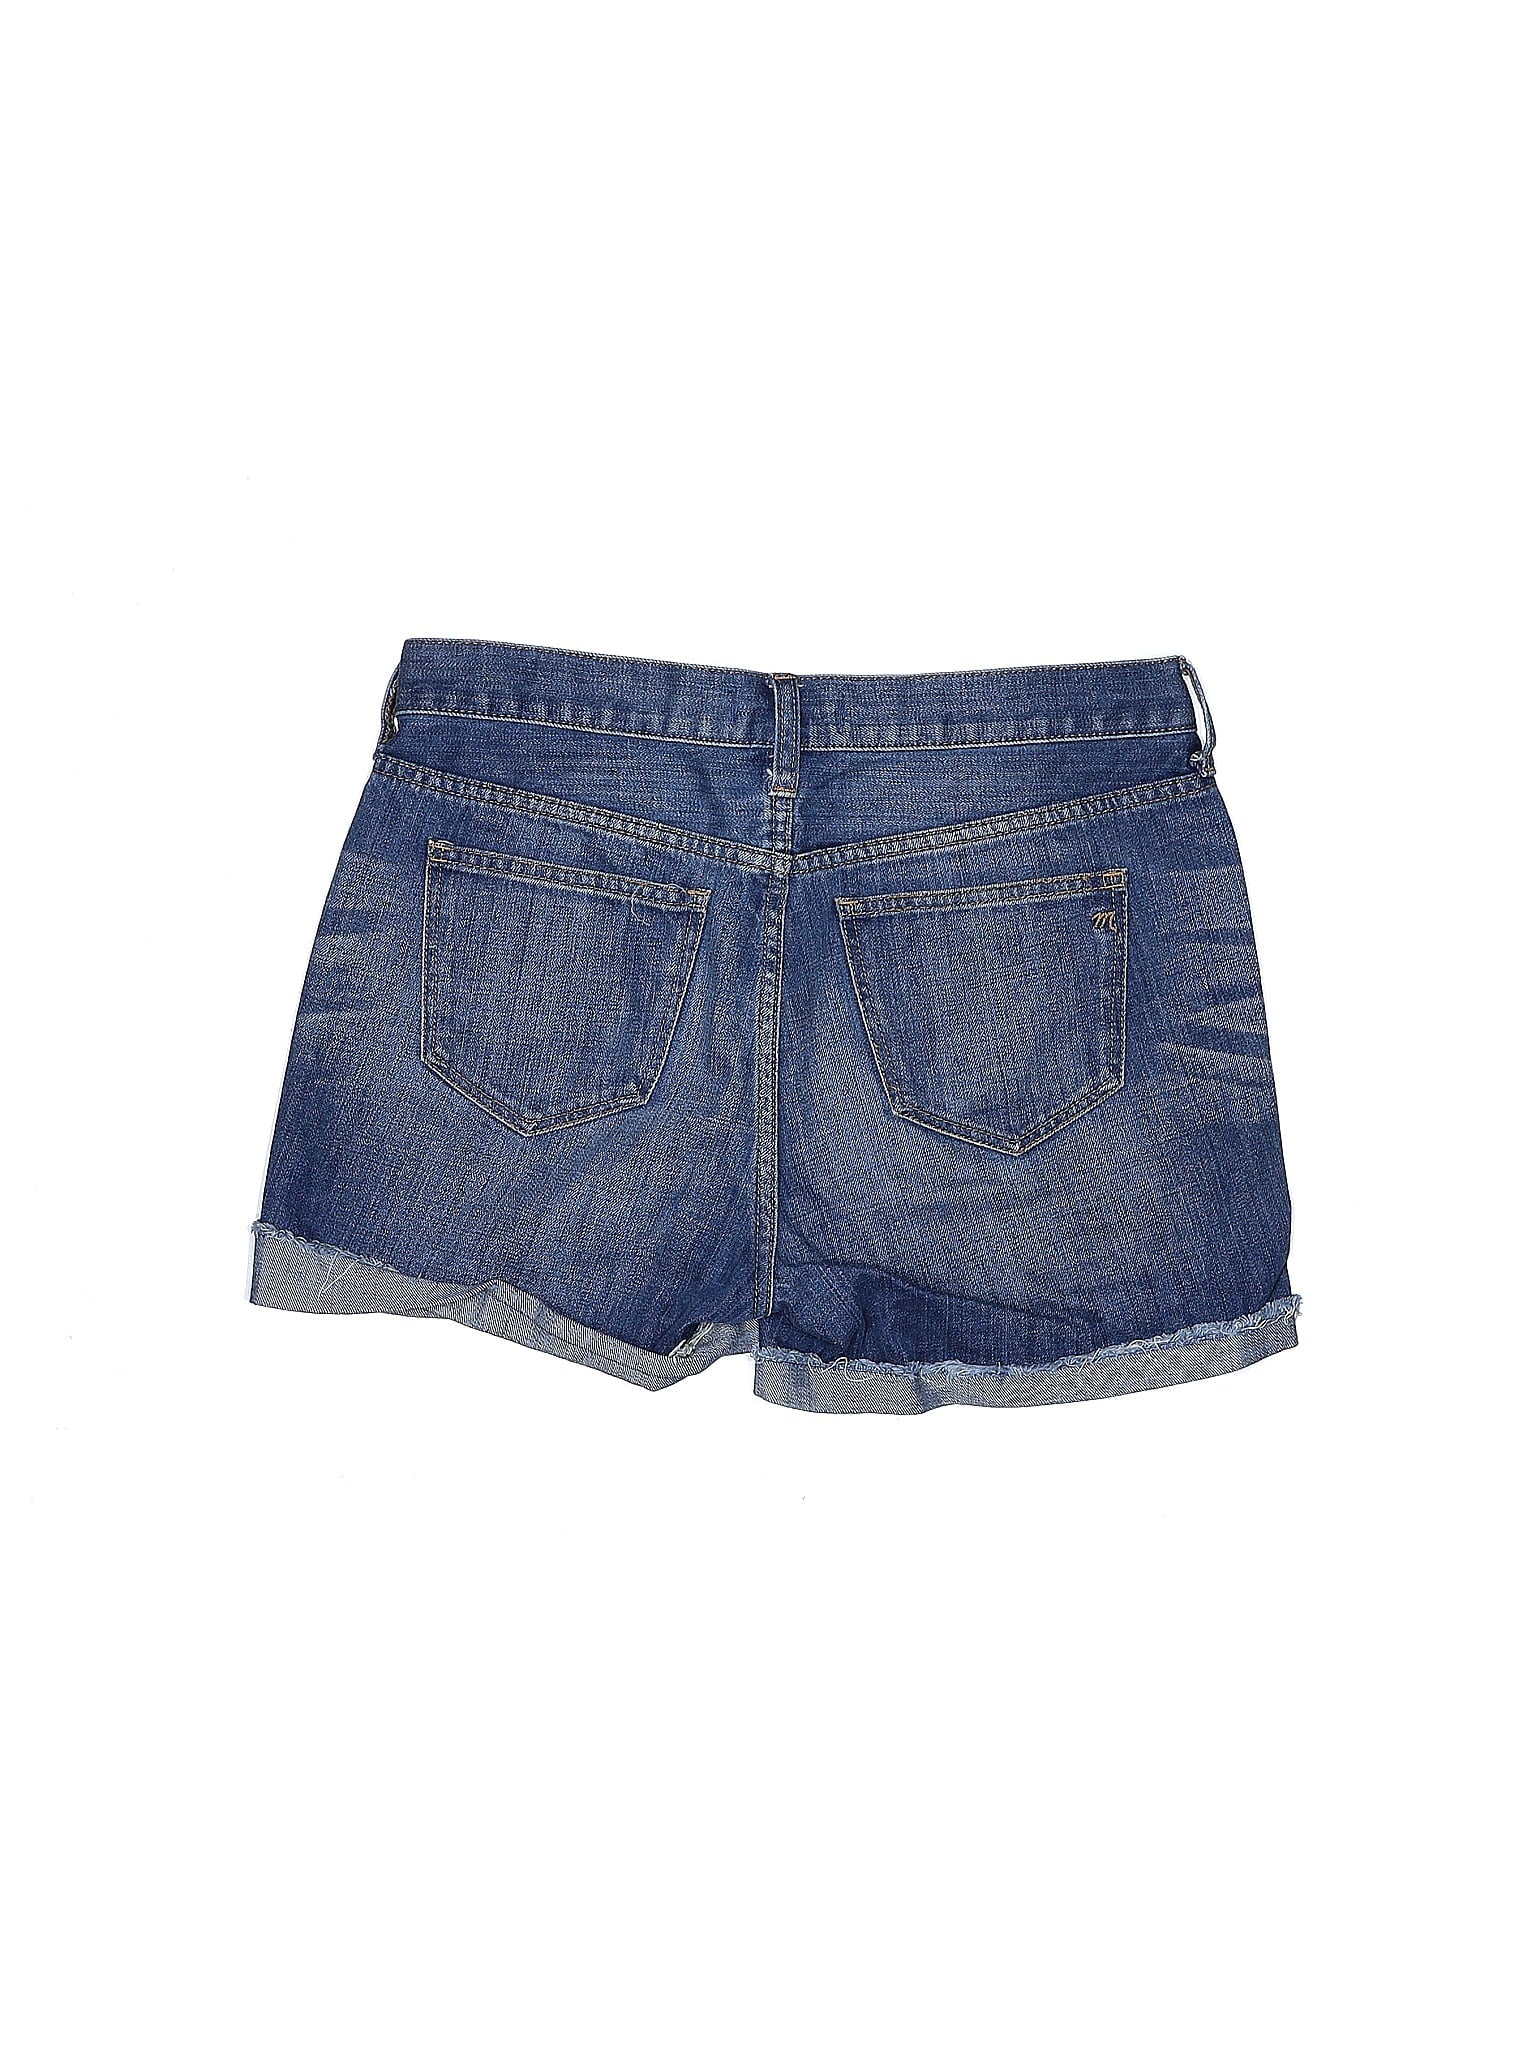 High-Rise Denim Shorts in Dark Wash waist size - 26